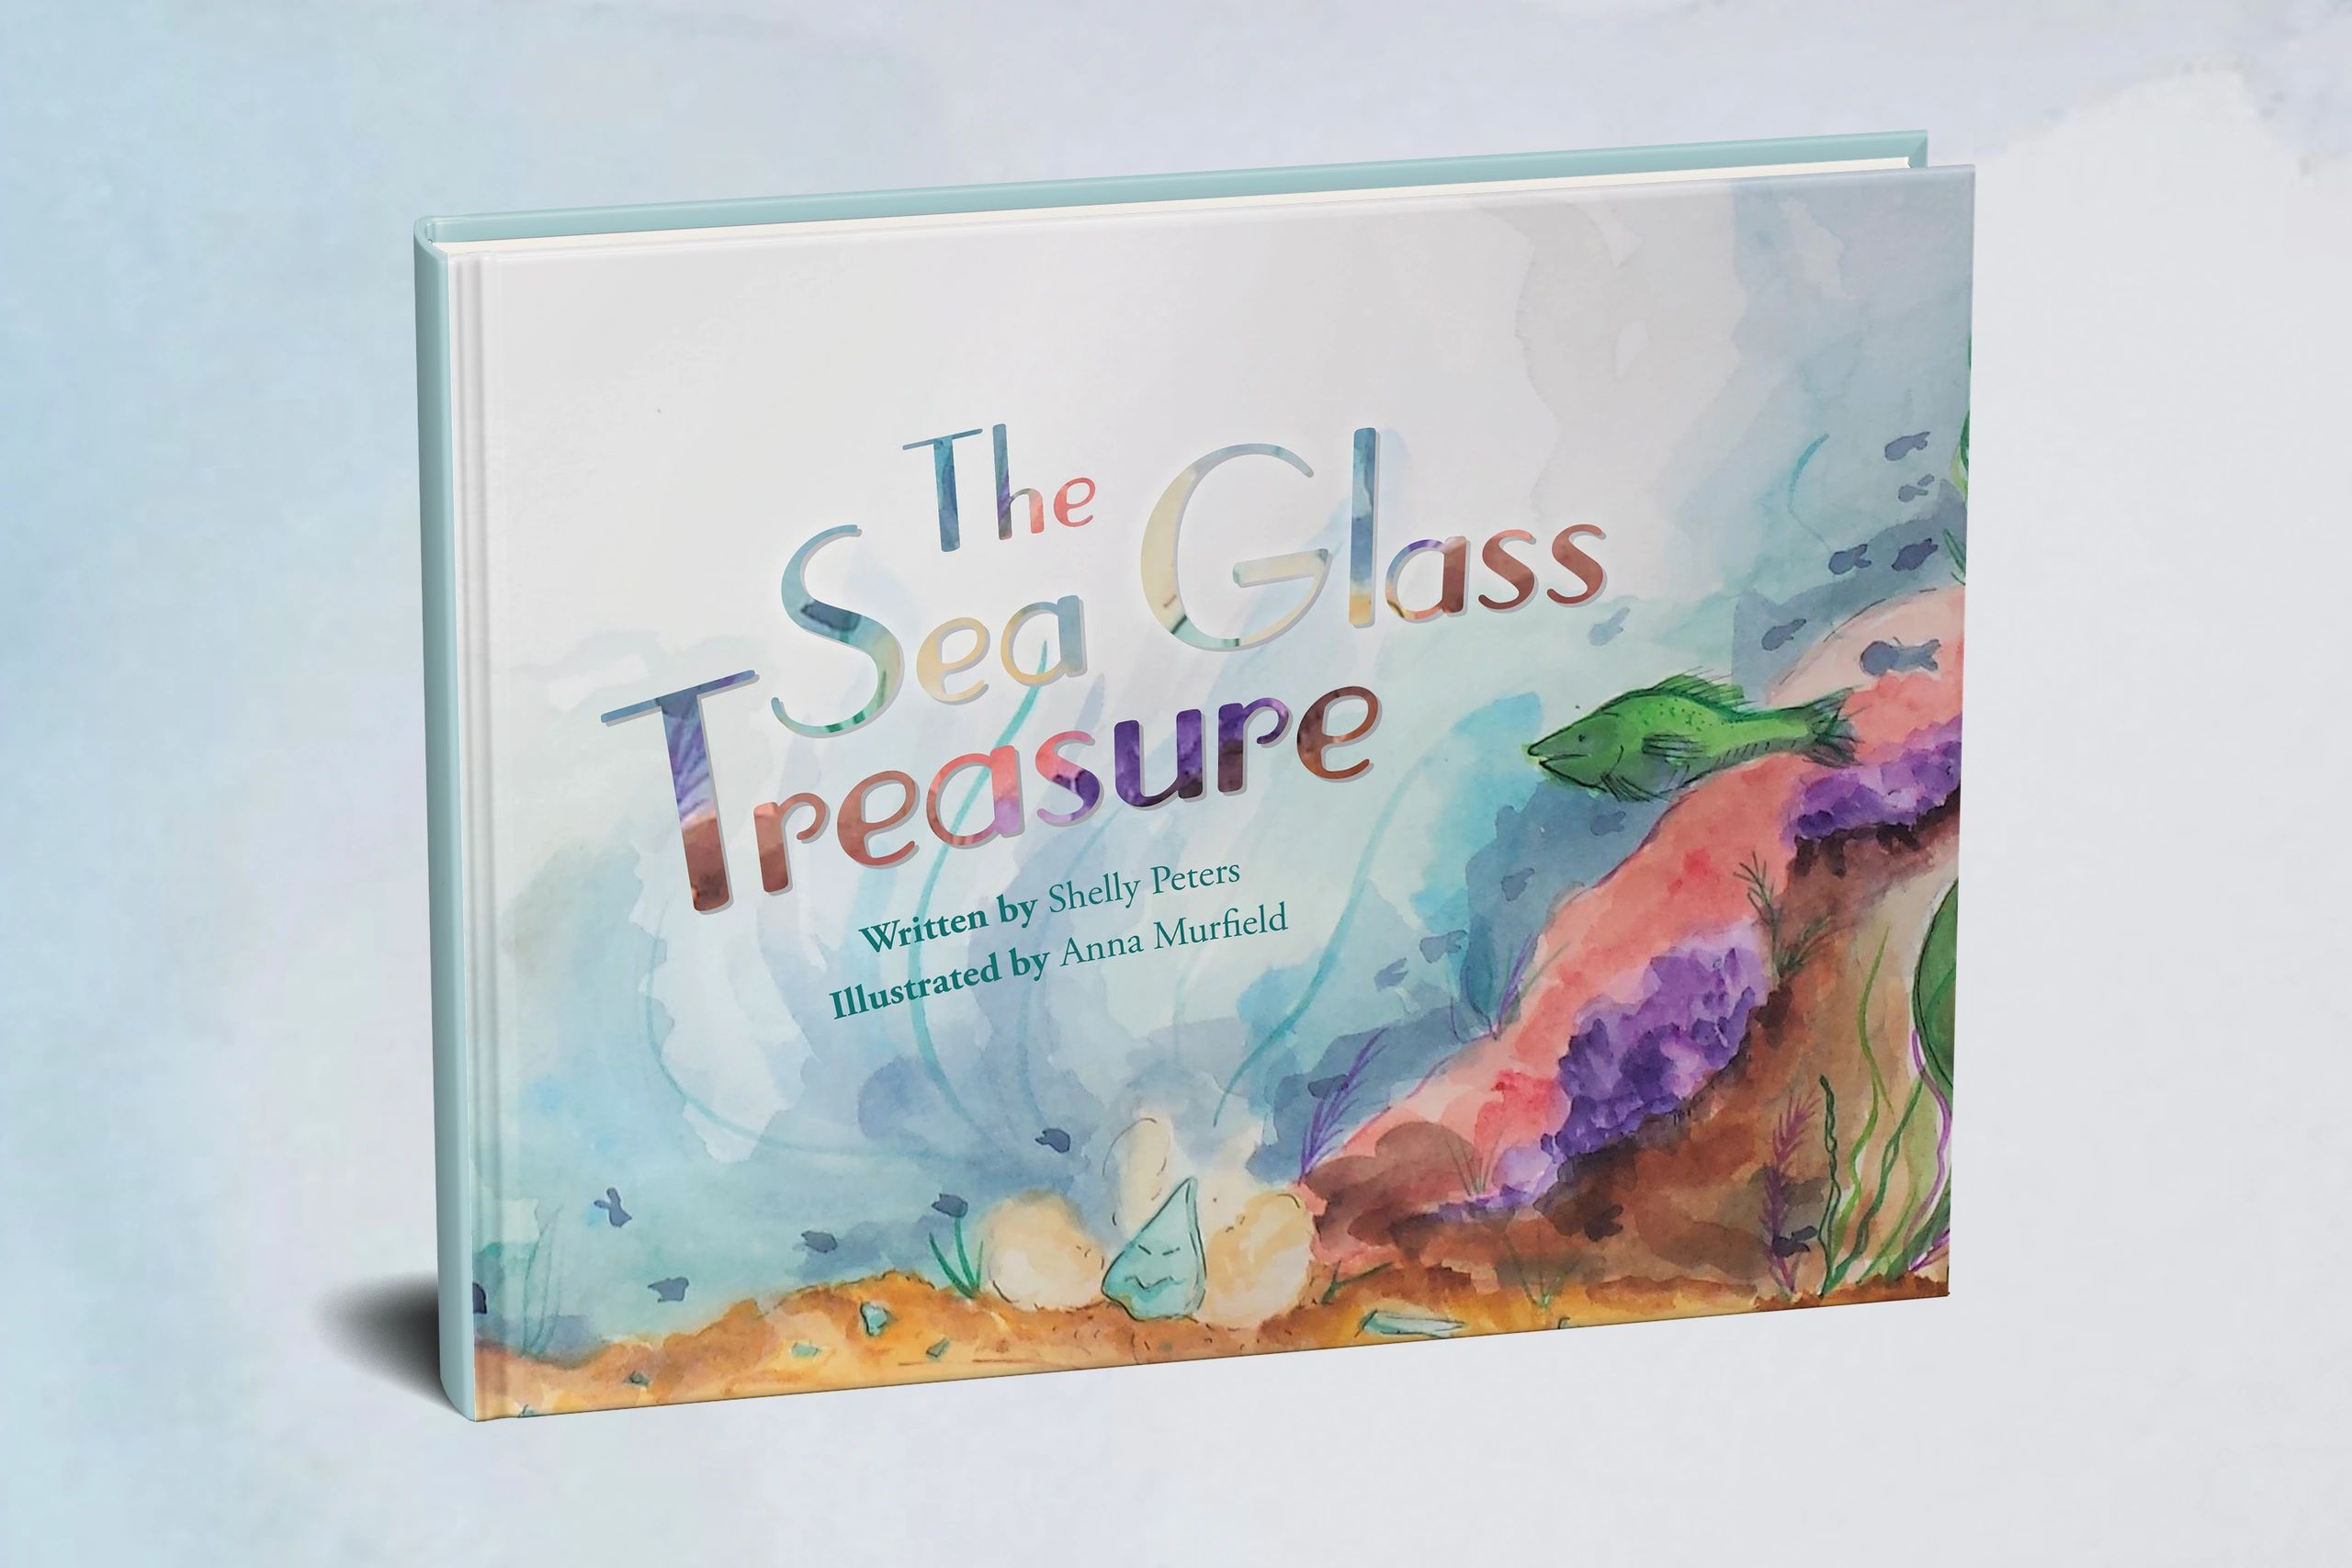 The Sea Glass Treasure